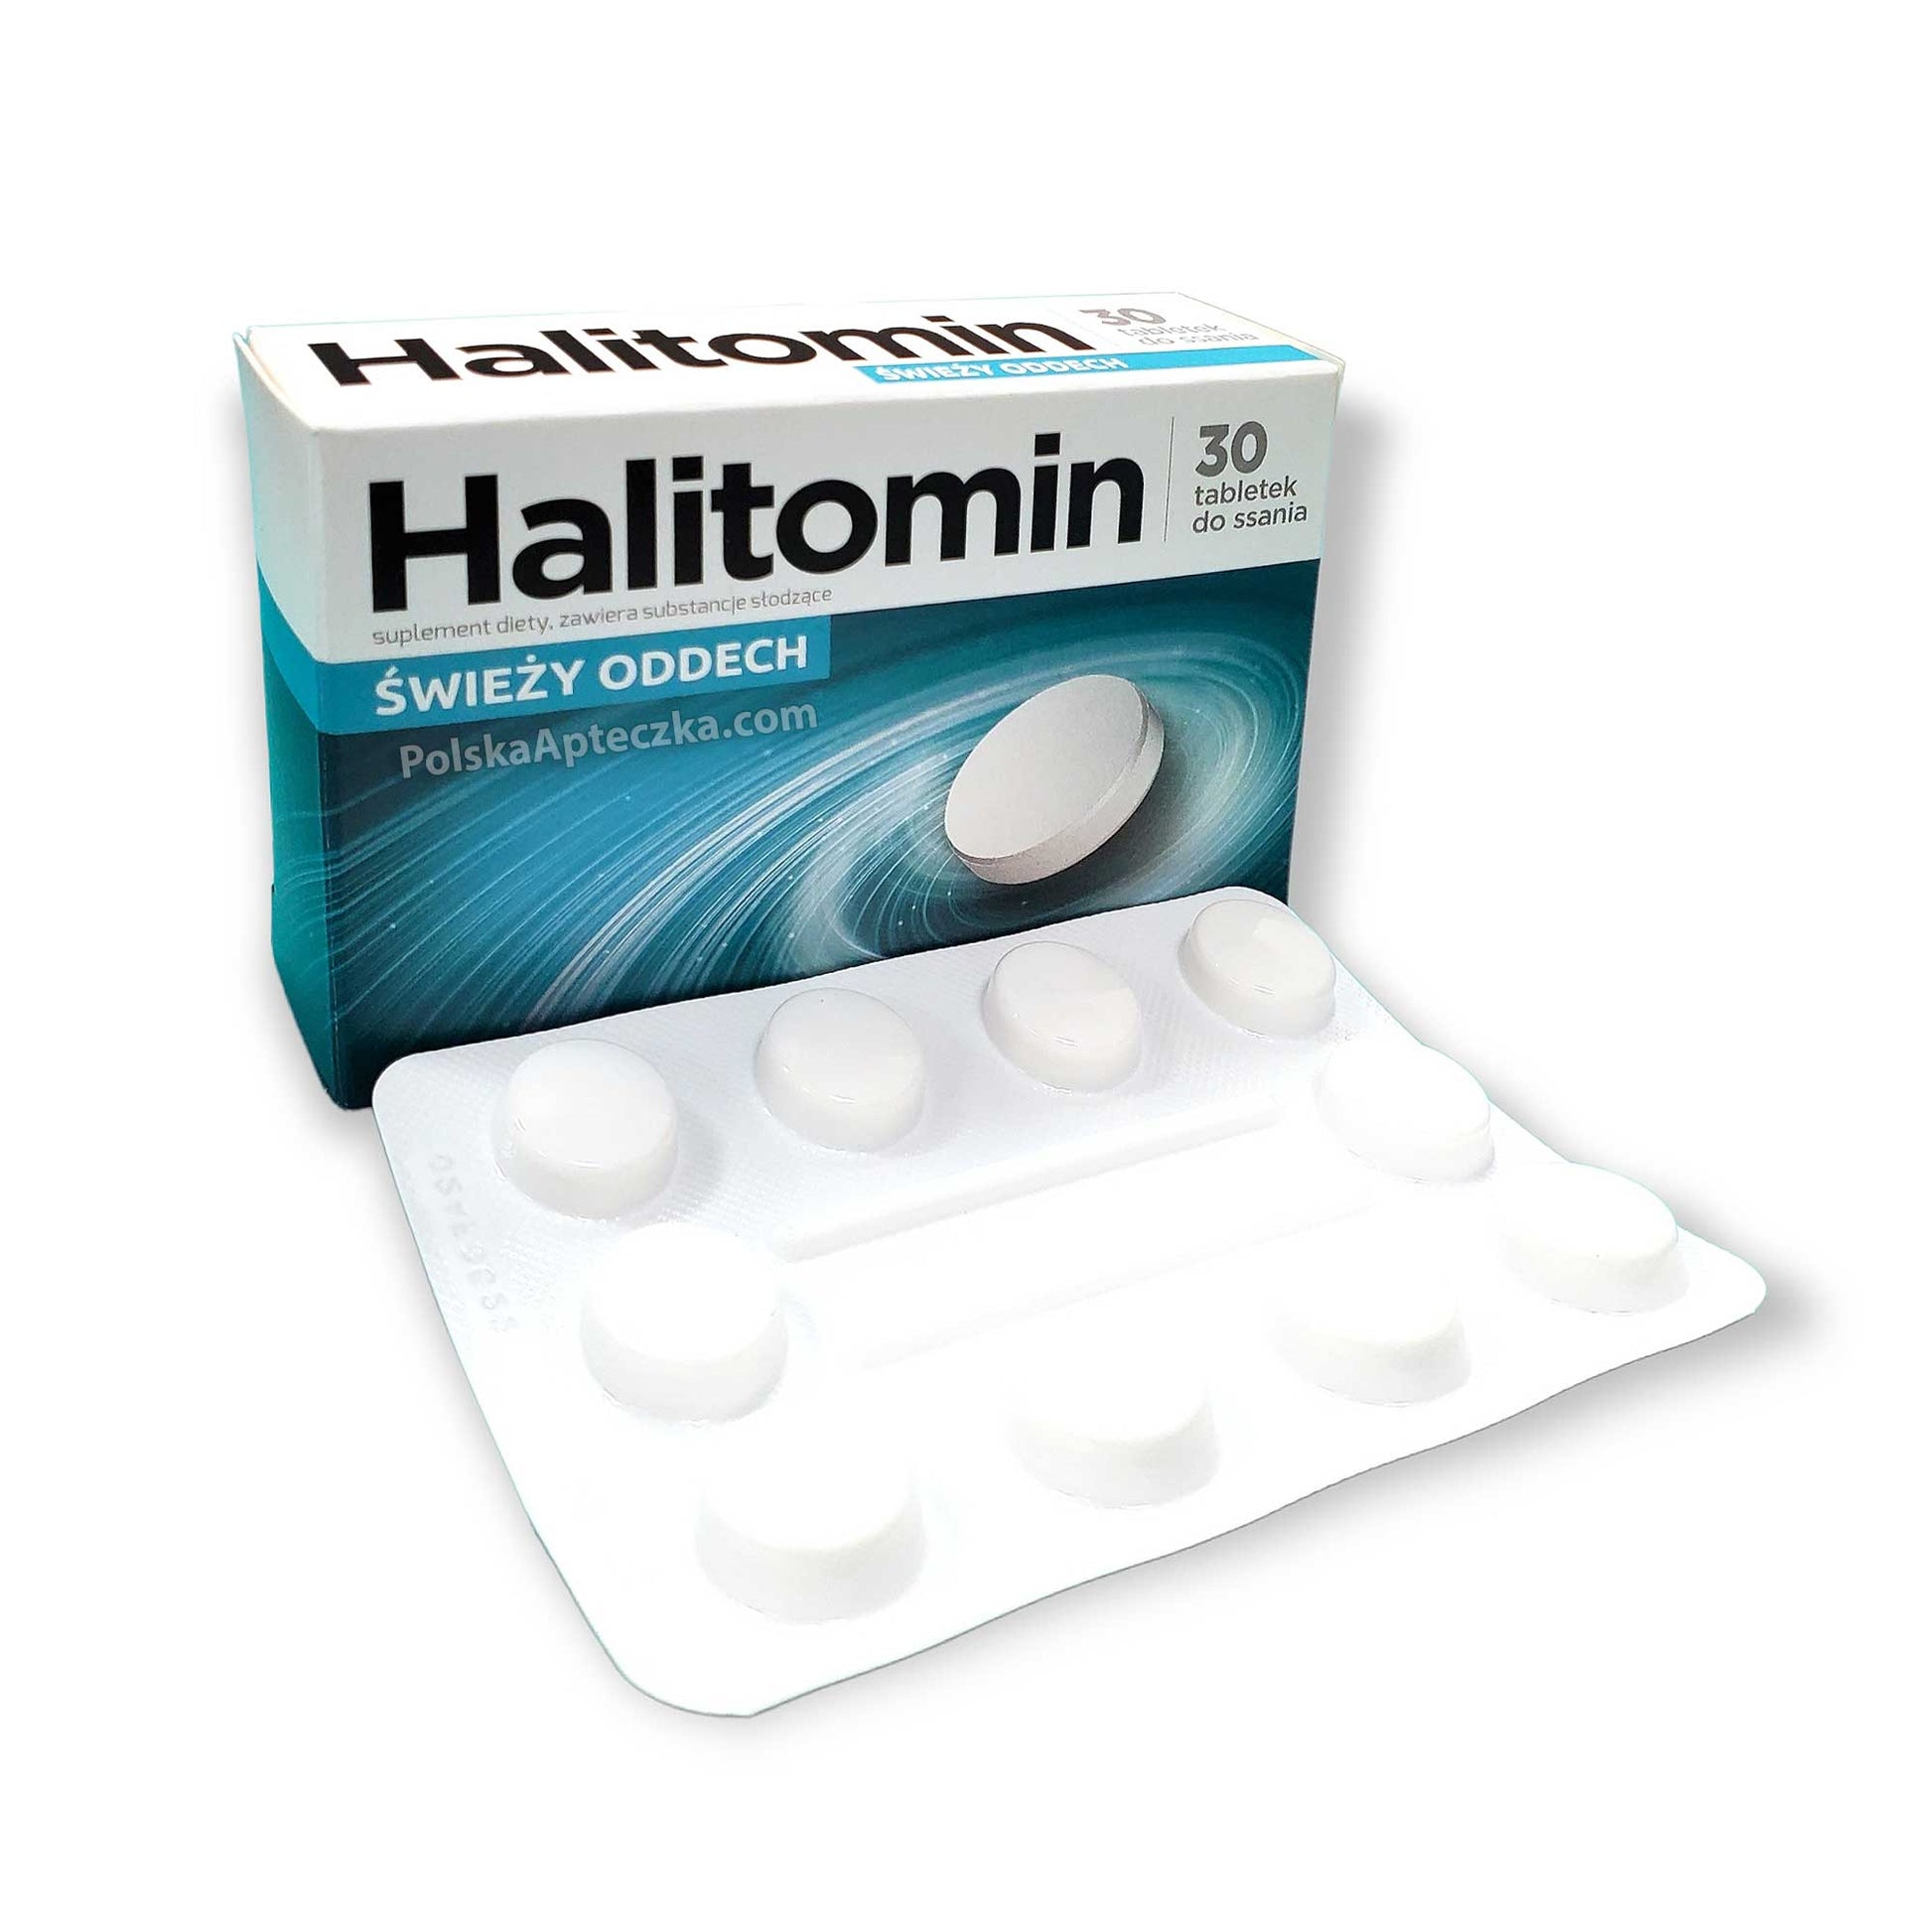 Halitomin świeży oddech 30 tabletek do ssania